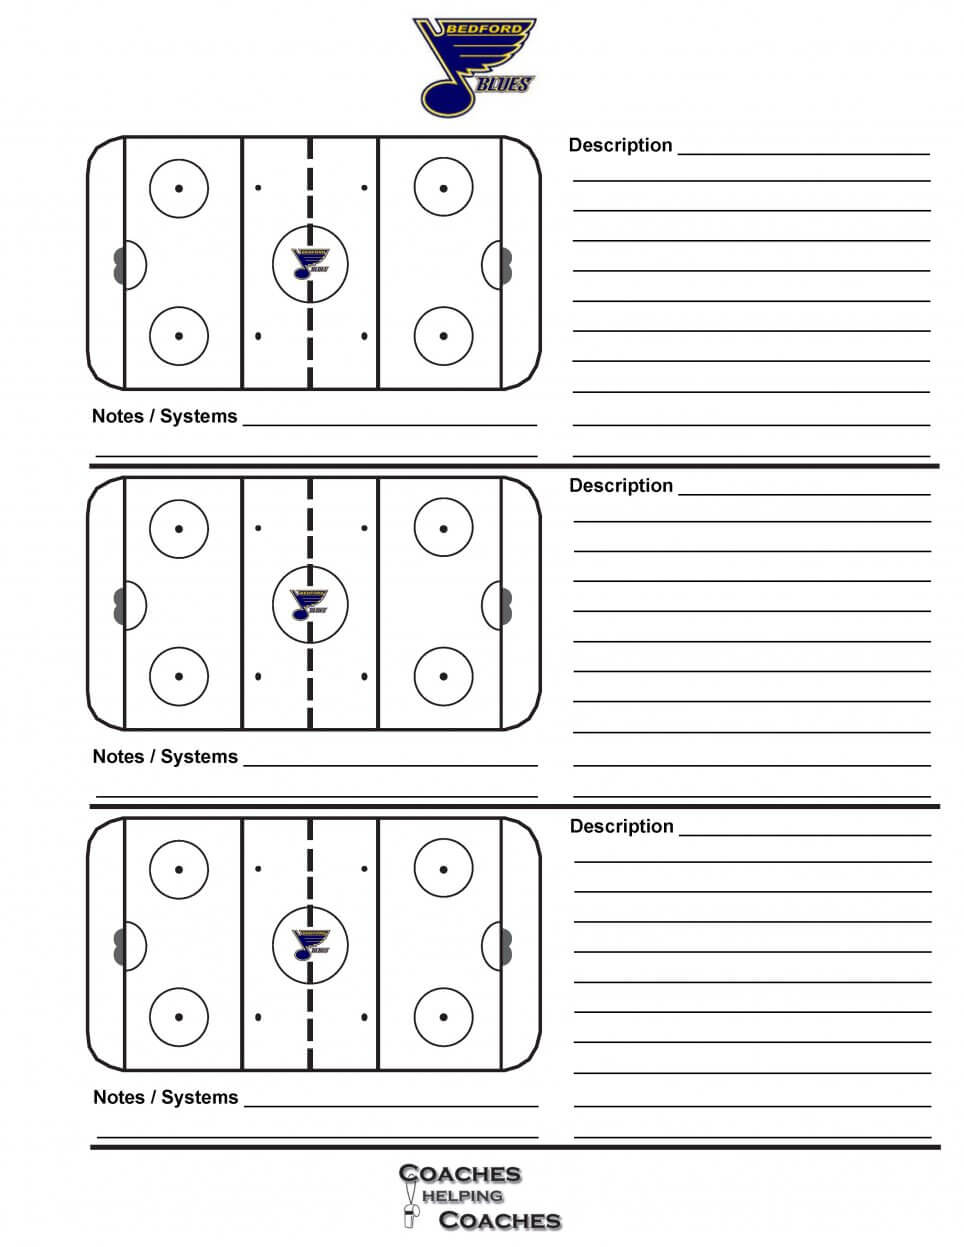 Bedford Minor Hockey Association Hockey Poweredgoalline.ca With Blank Hockey Practice Plan Template